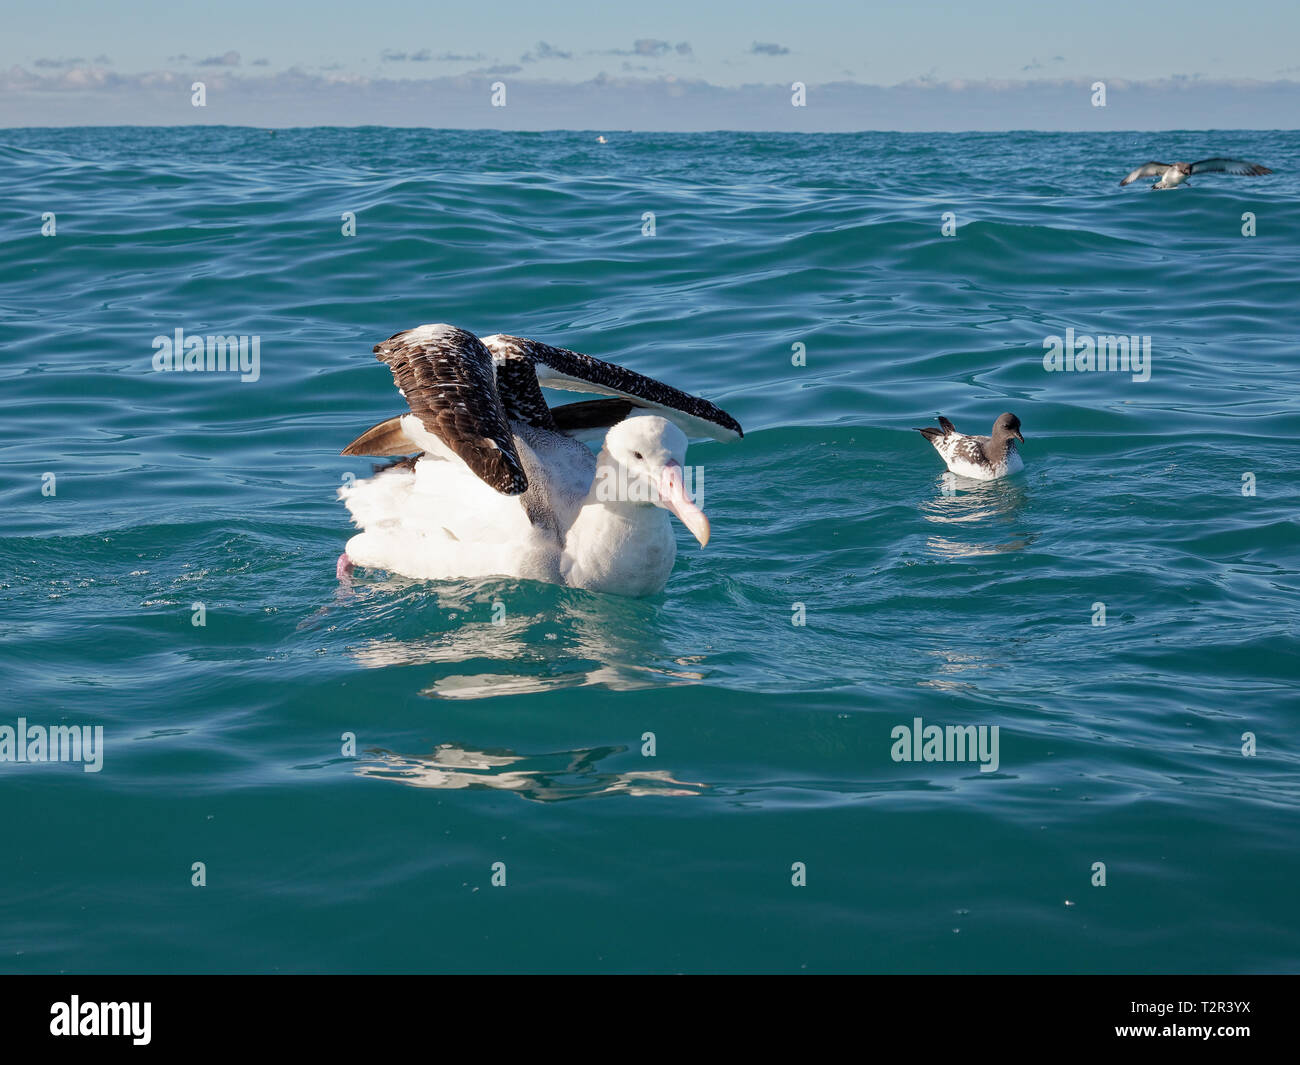 Southern royal albatross, paddling on the ocean, Kaikoura, New Zealand. Stock Photo